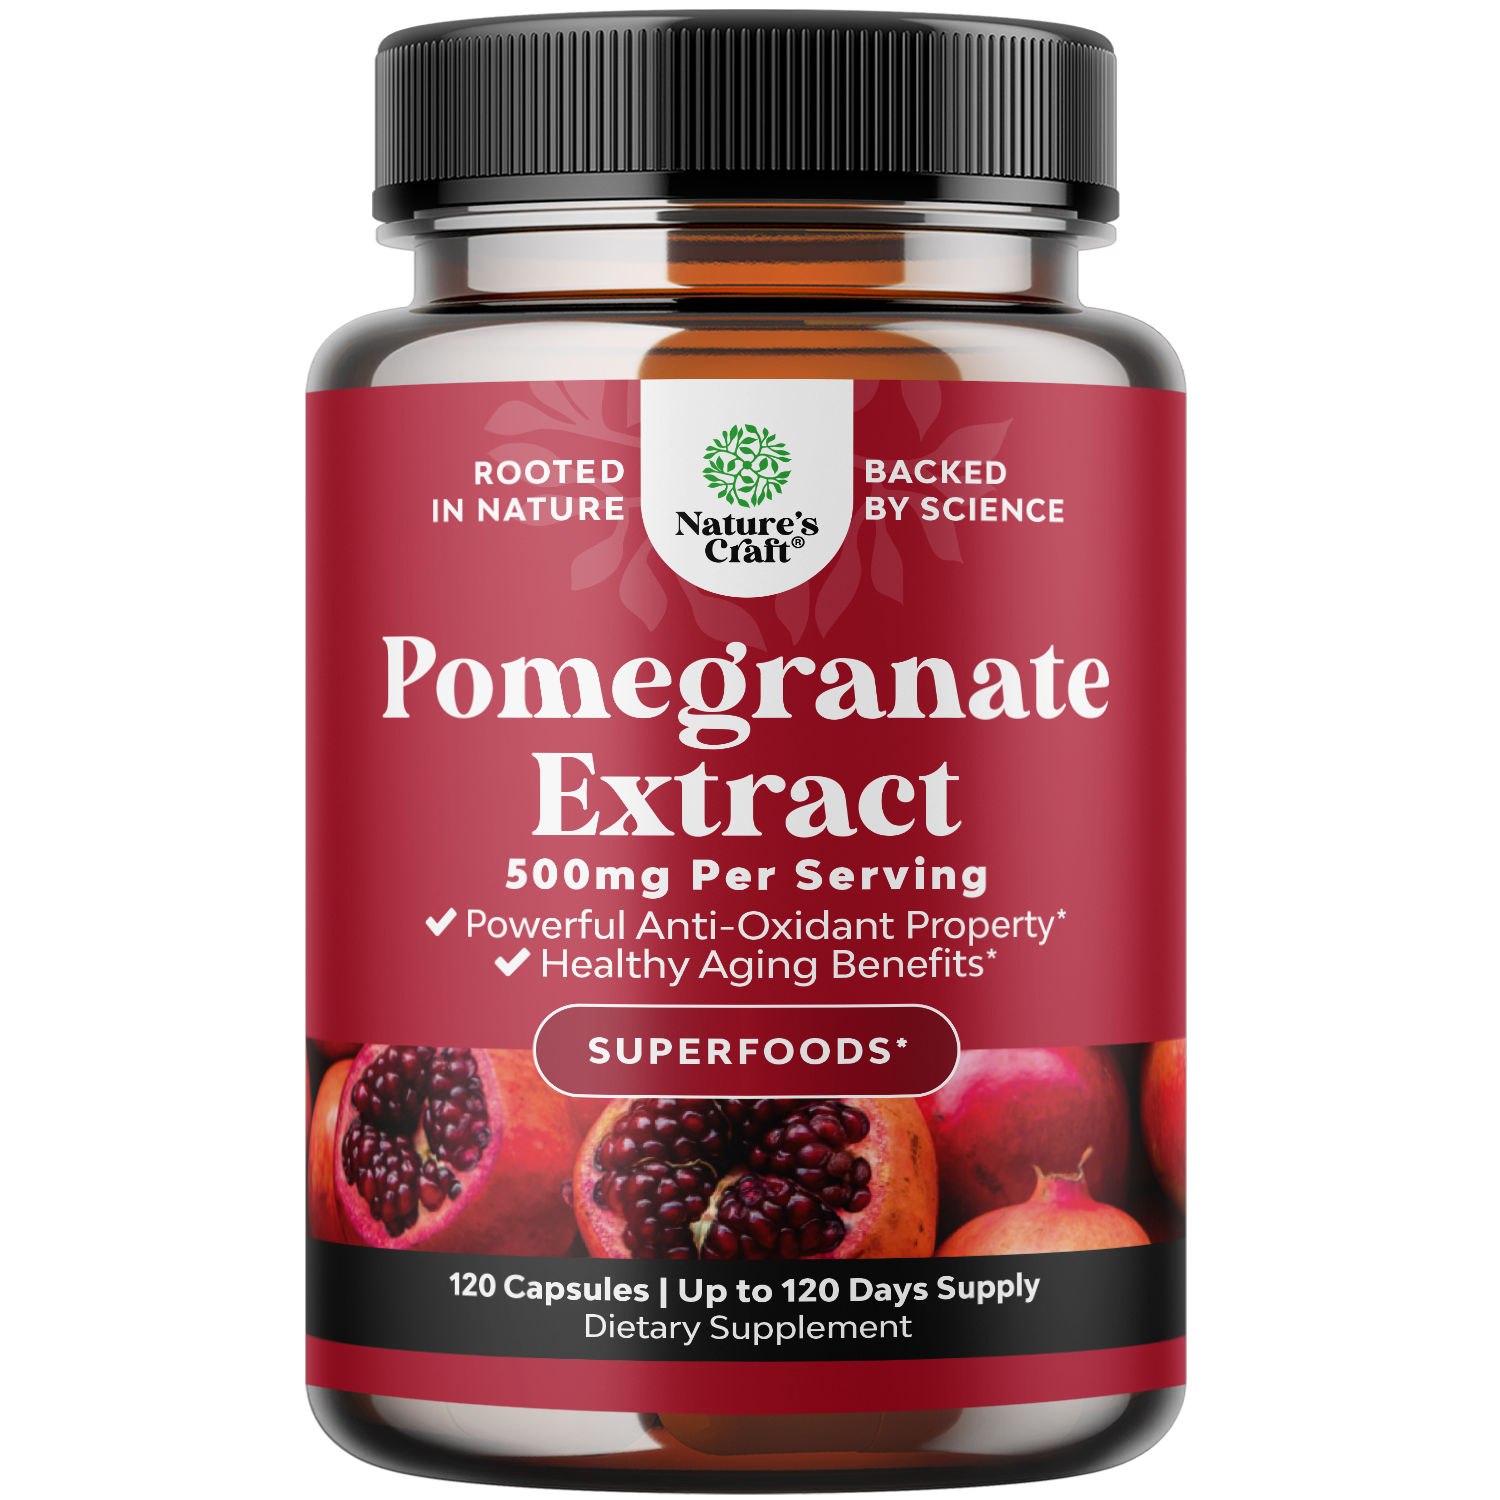 Pomegranate Extract - 120 Capsules - Nature's Craft